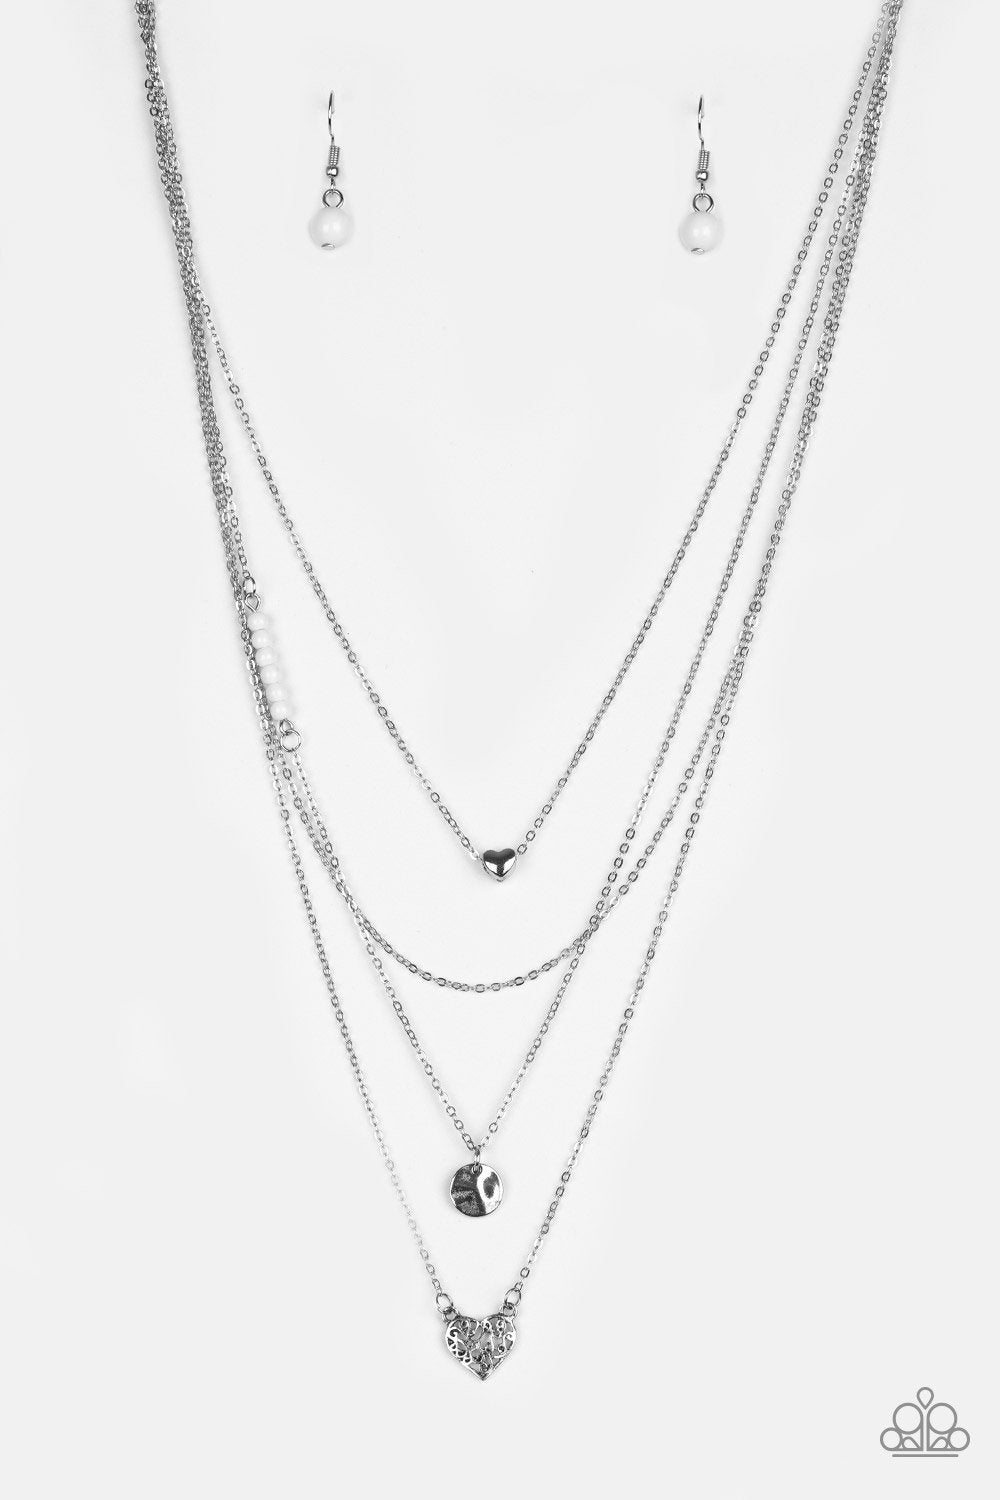 Gypsy Heart White (Silver Heart) Necklace freeshipping - JewLz4u Gemstone Gallery